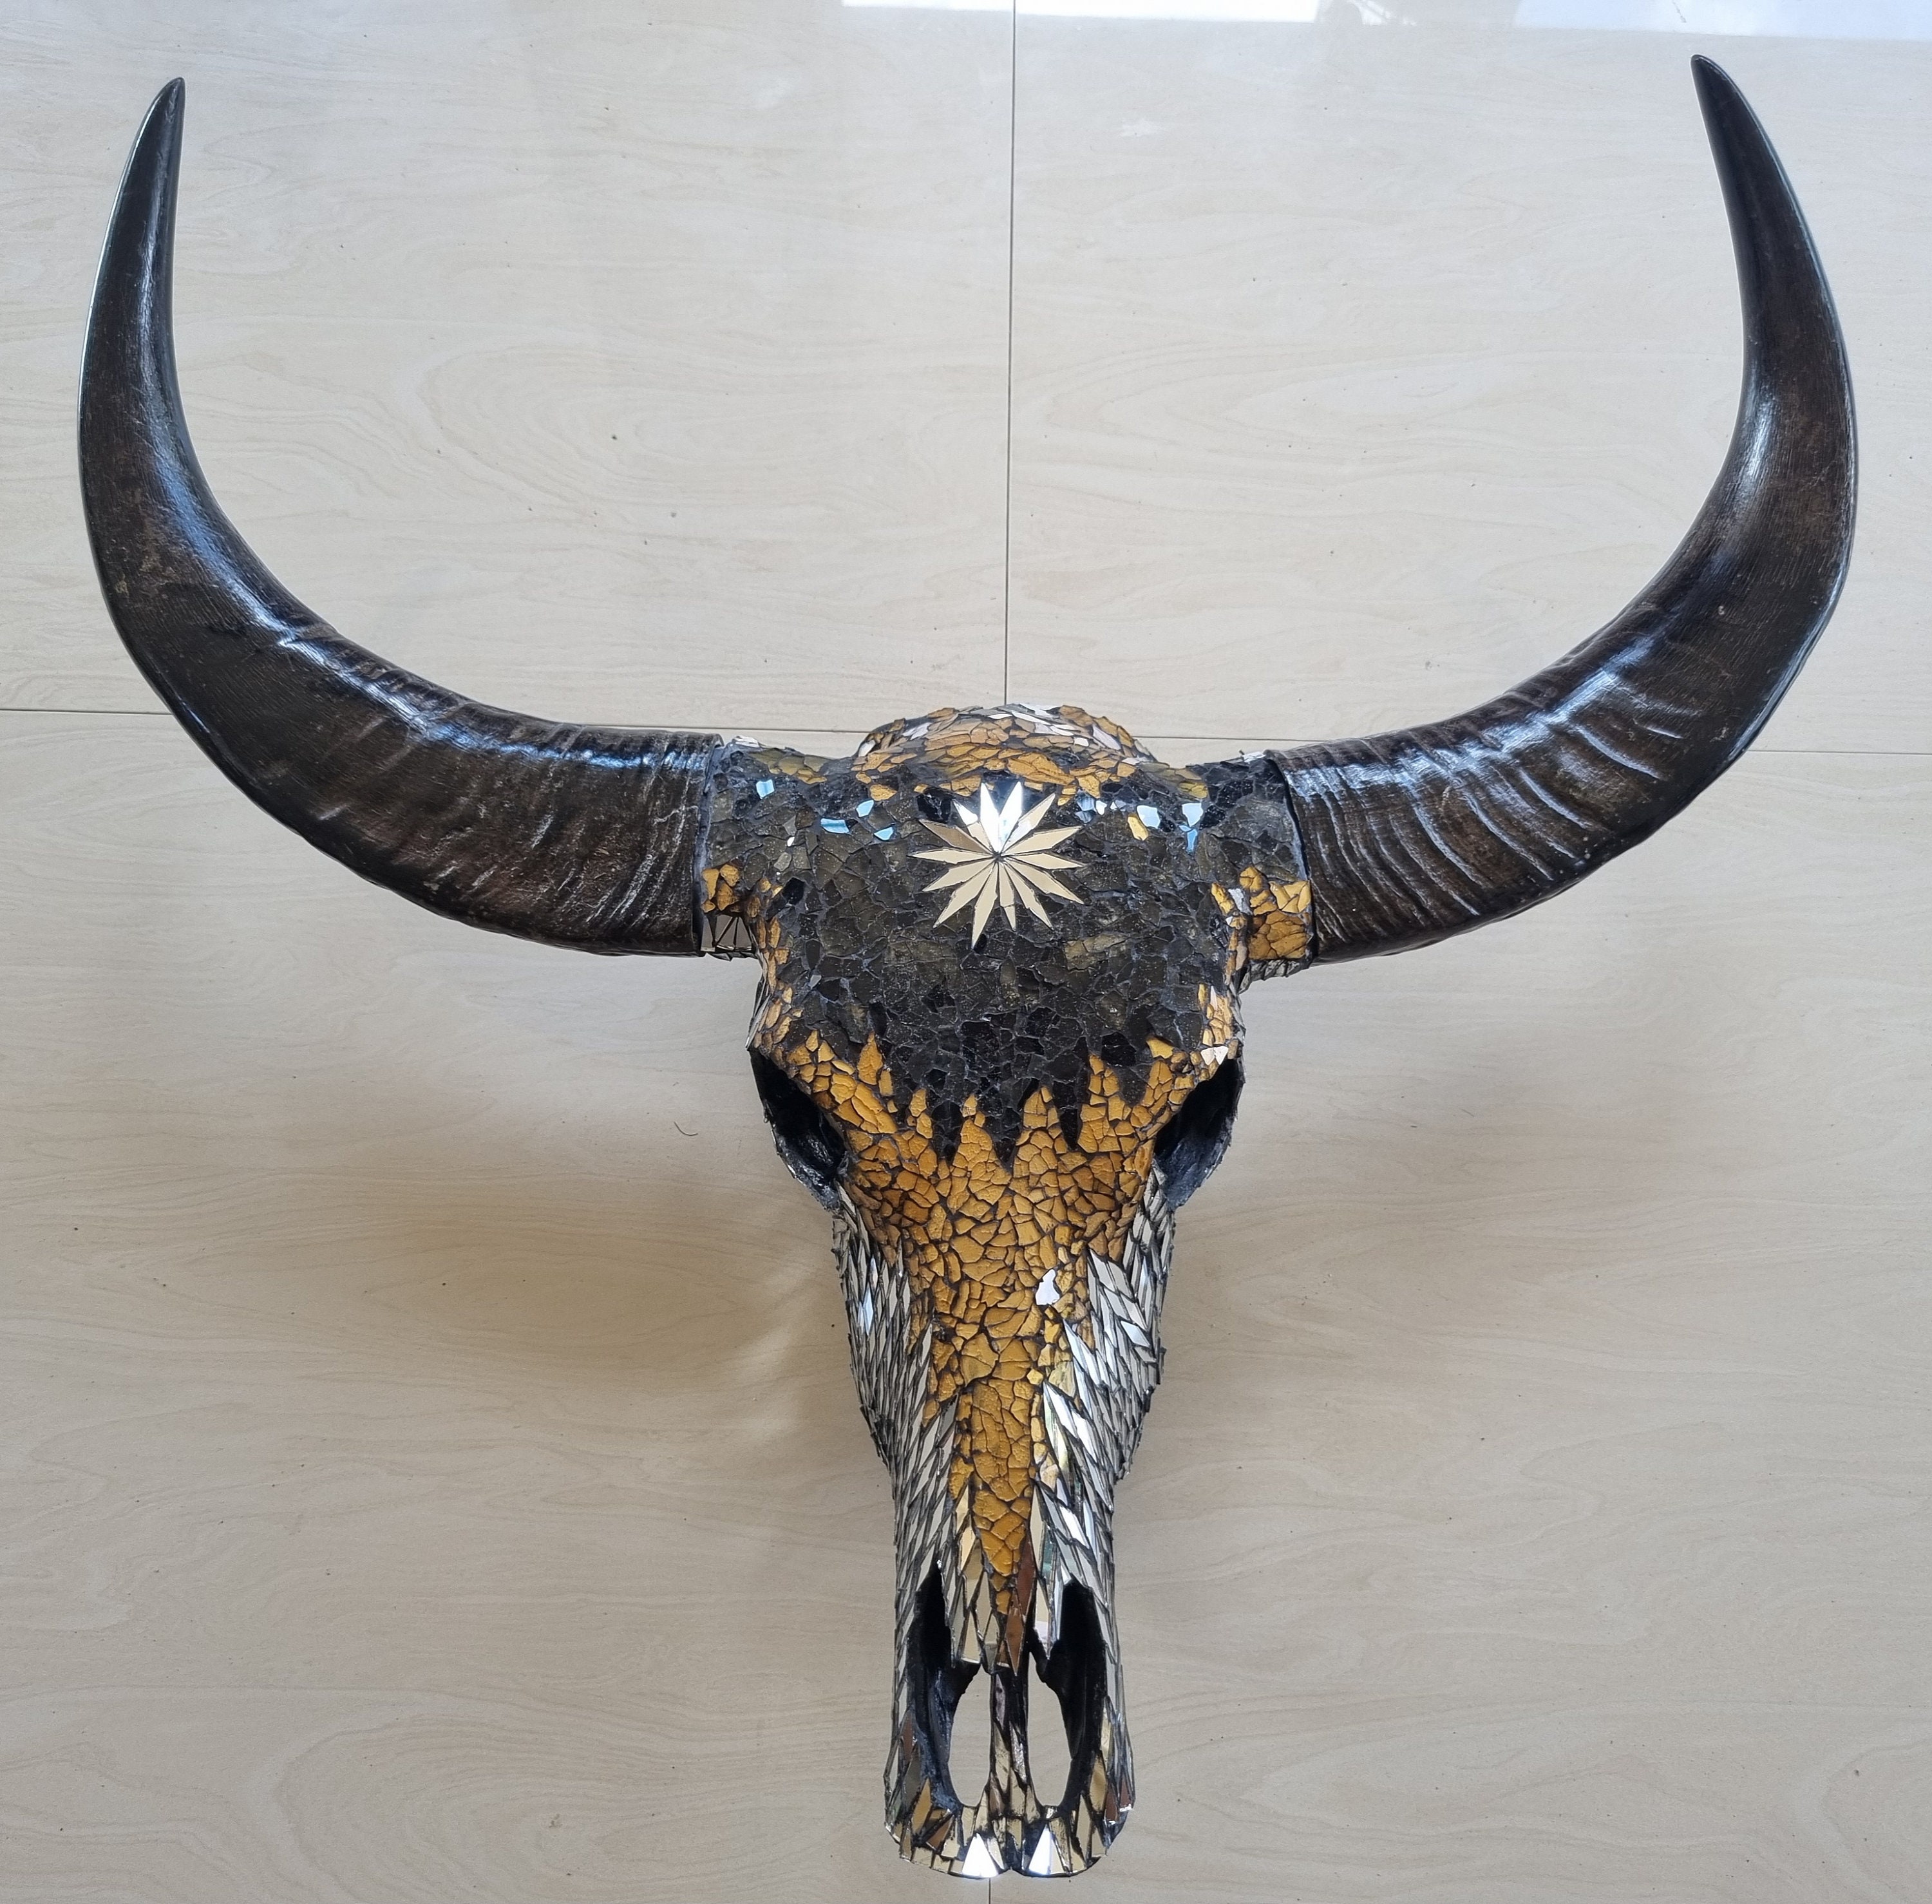 SKULL art glass mosaic gold mixed buffalo skull mirror